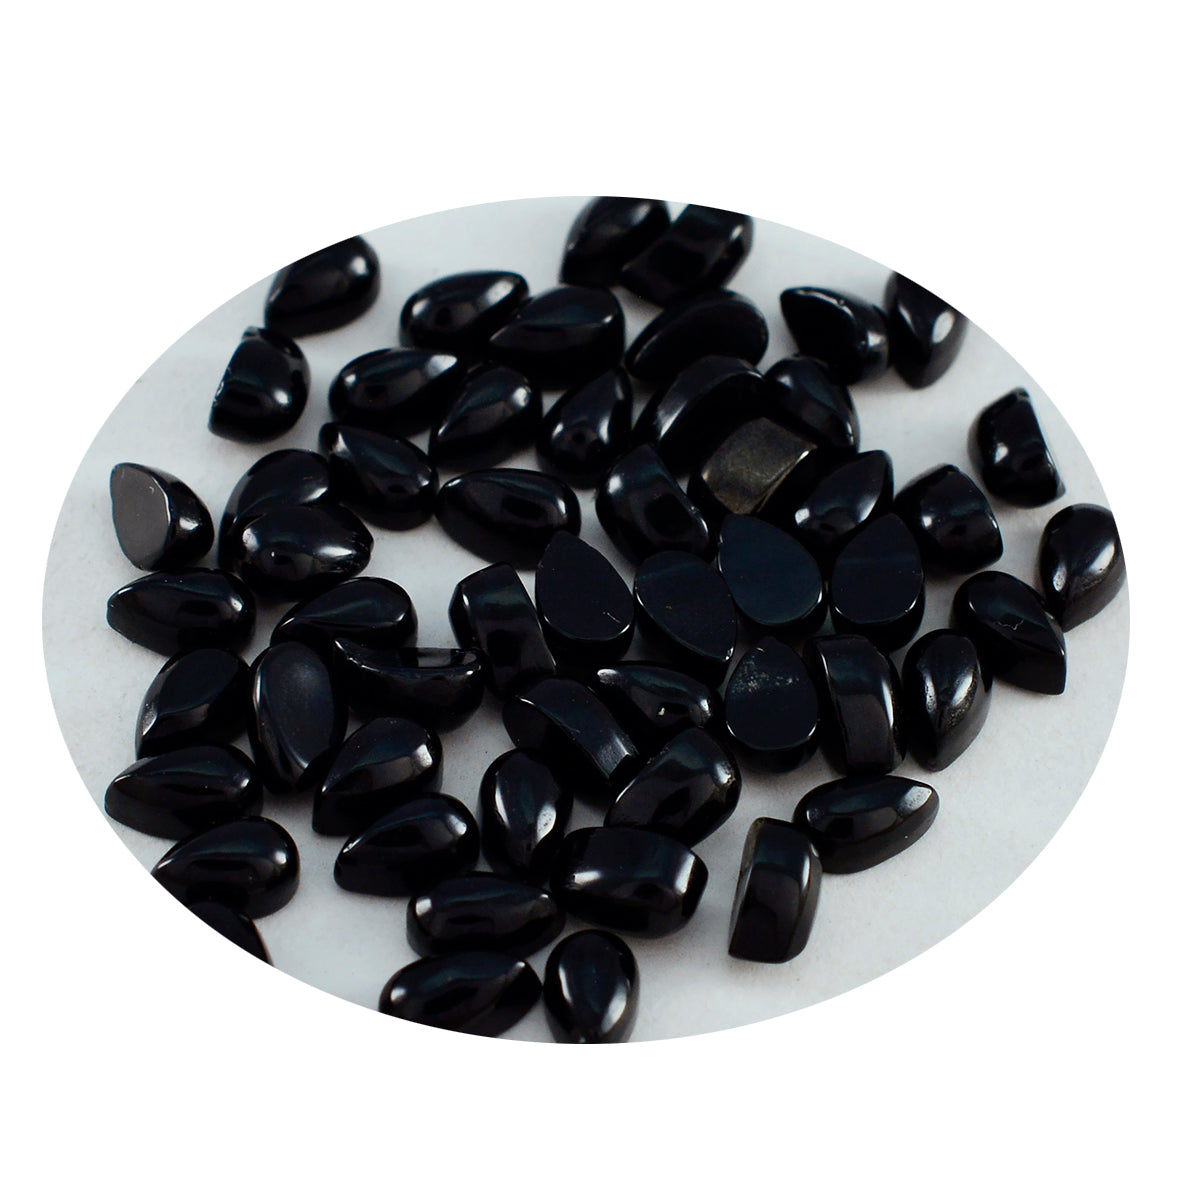 Riyogems 1PC Black Onyx Cabochon 3X5 mm Pear Shape sweet Quality Loose Gem